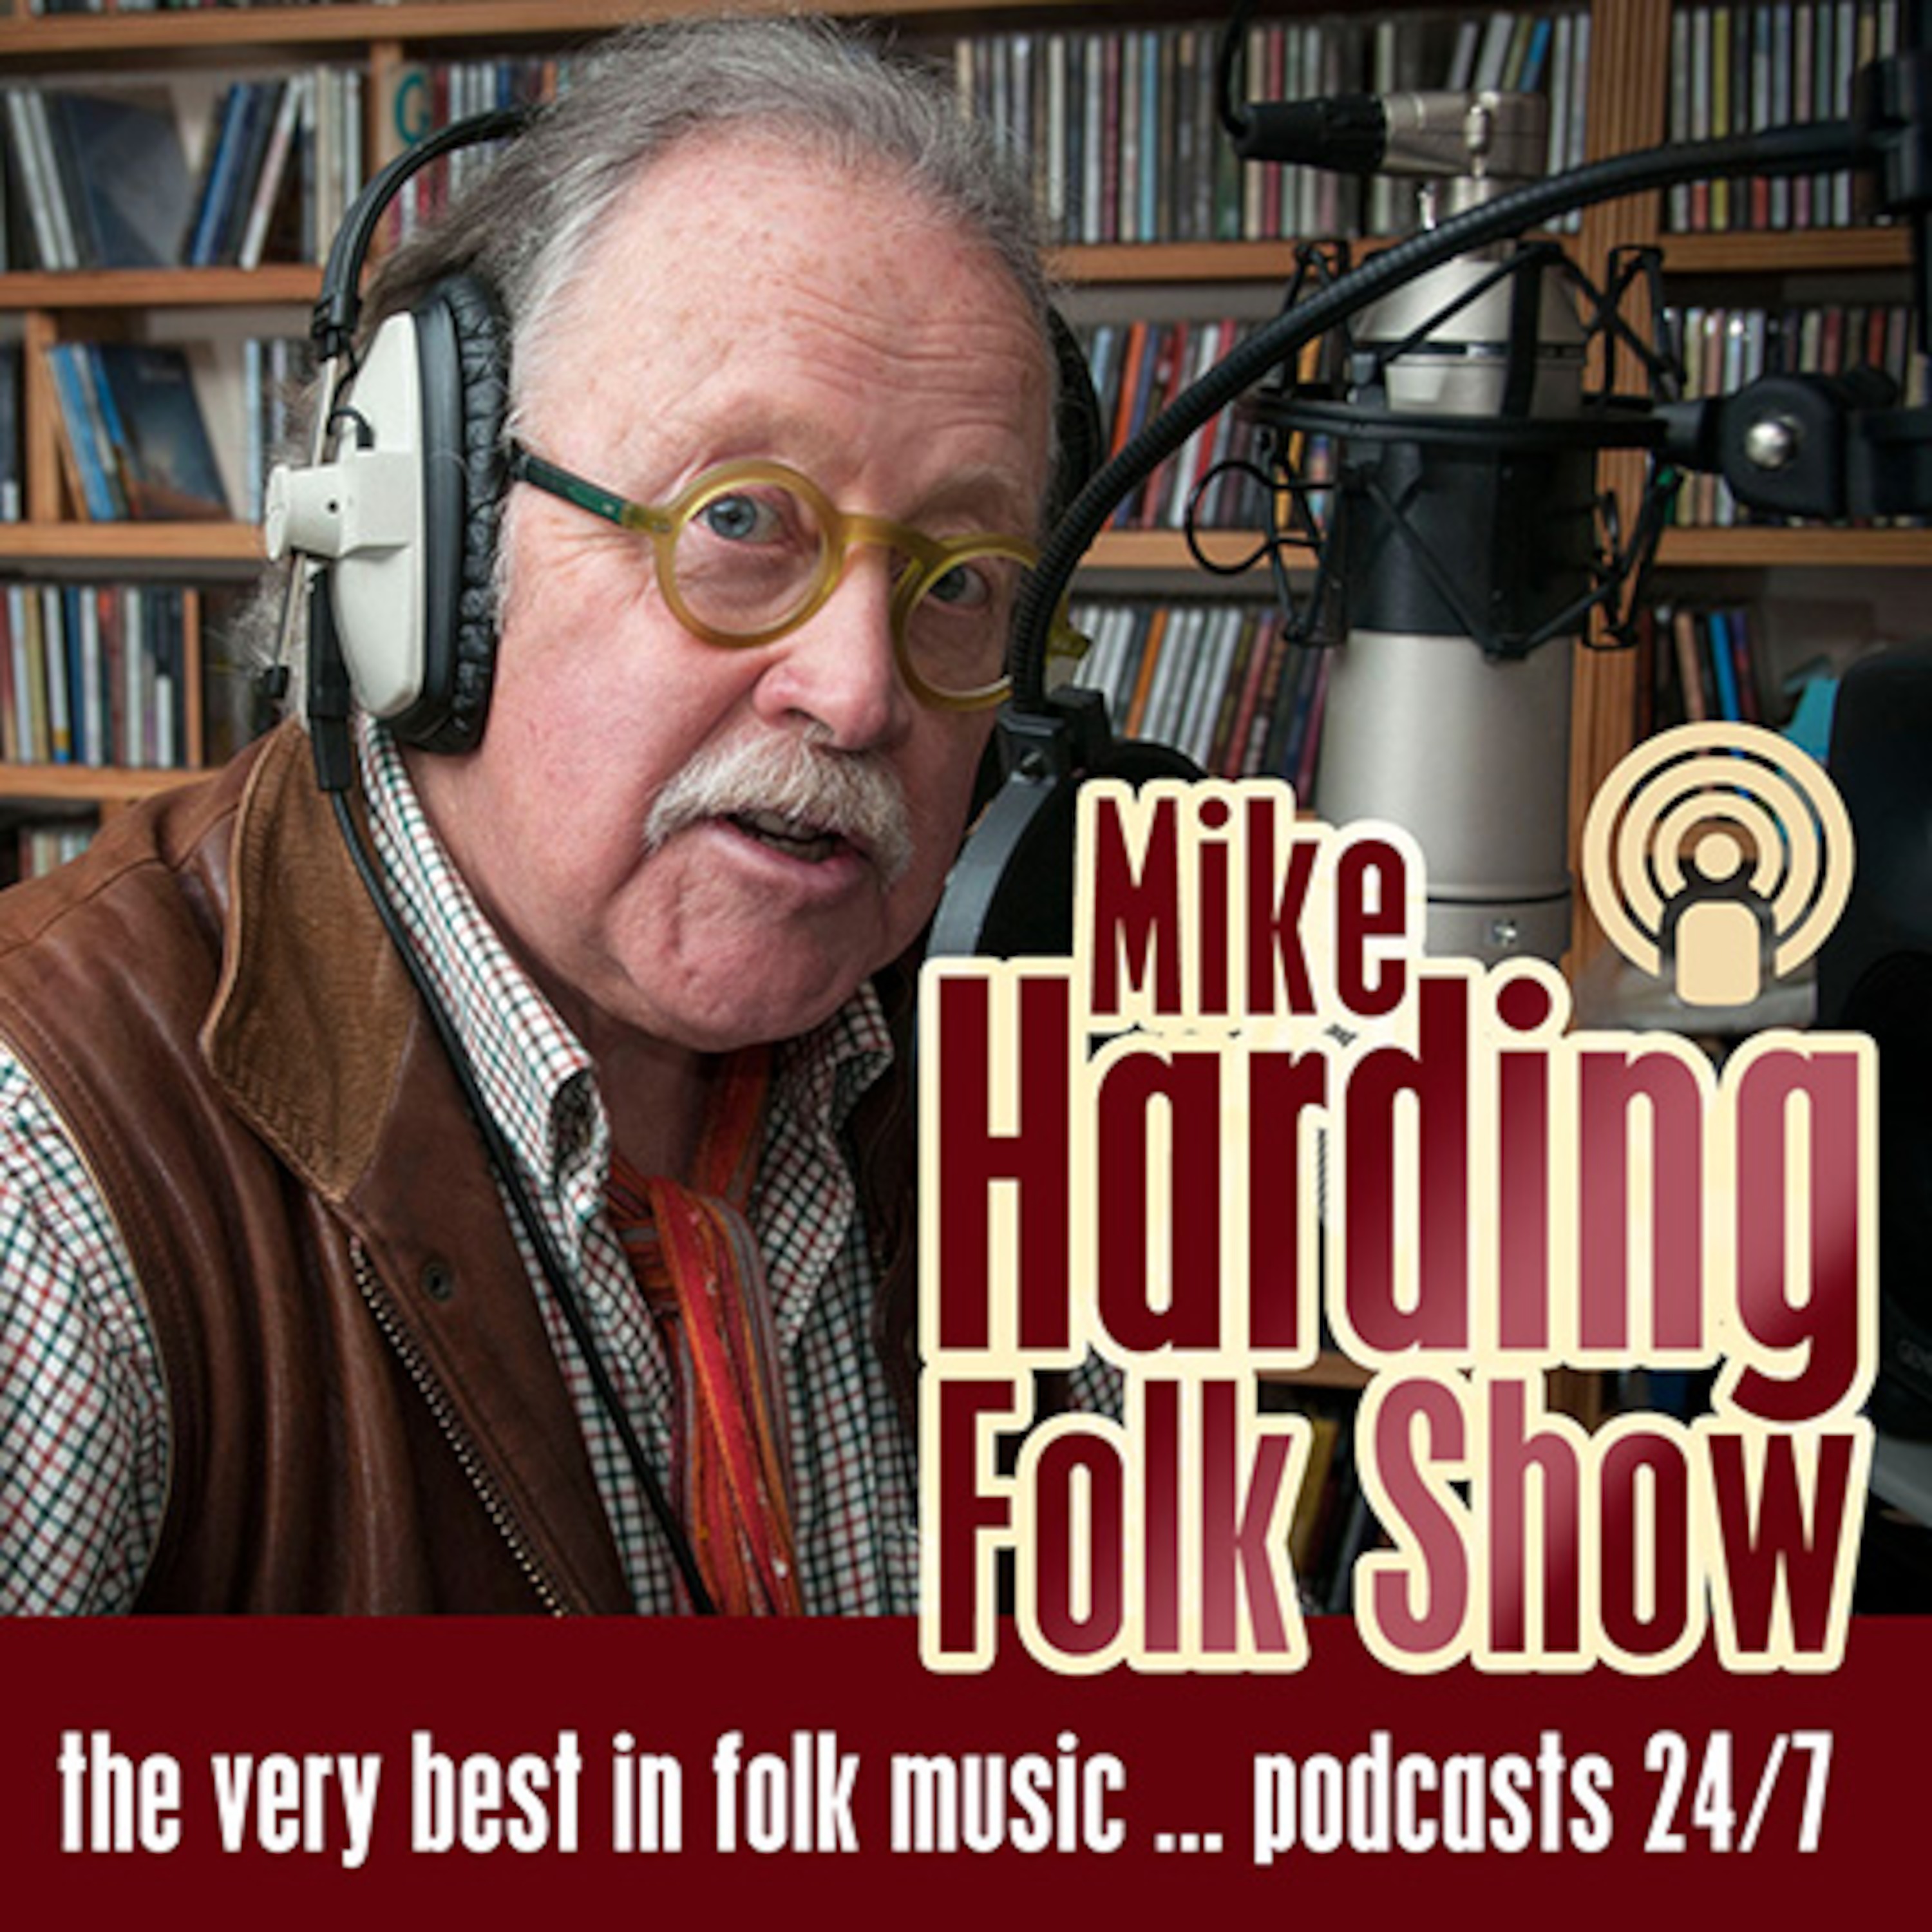 Mike Harding Folk Show 128